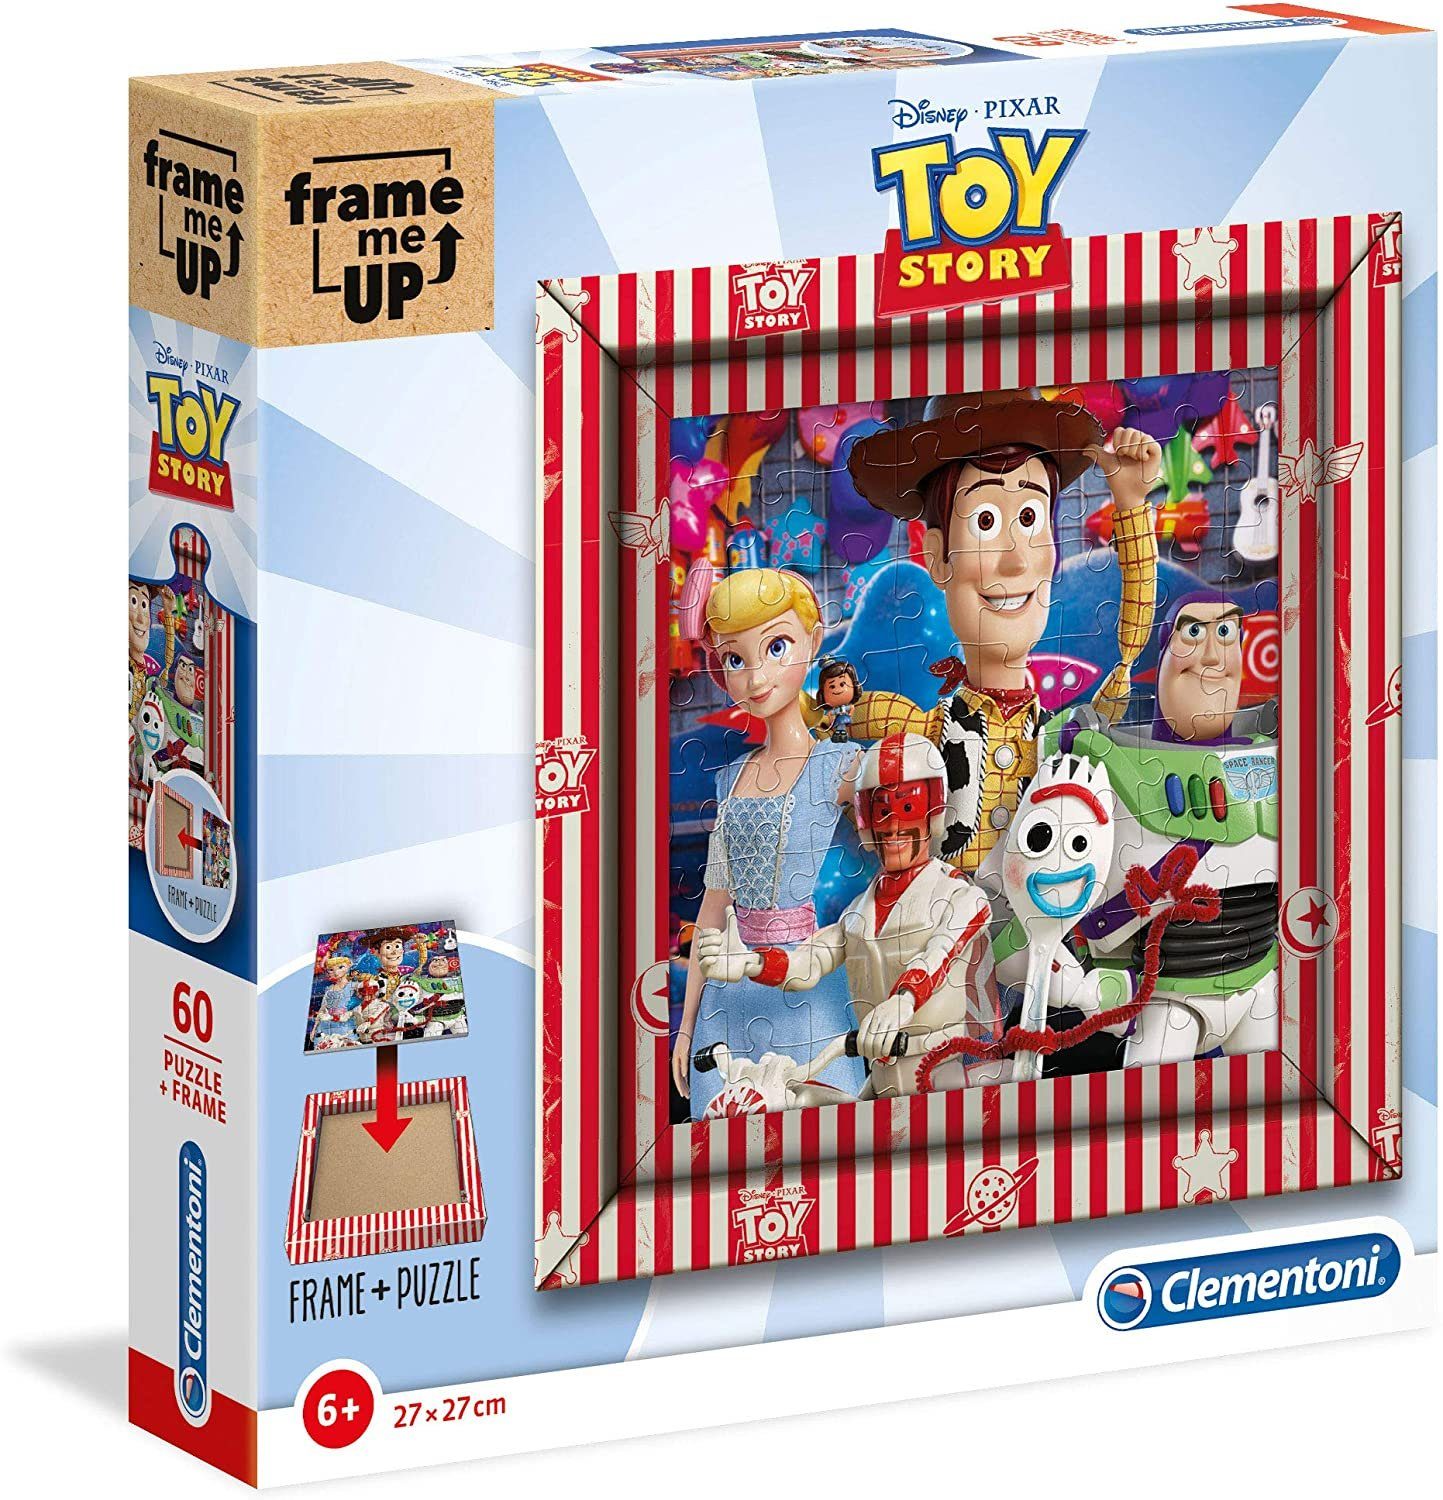 Up Me Toy - Clementoni® Puzzle Frame Disney Teile), (60 Story Puzzle - Puzzleteile